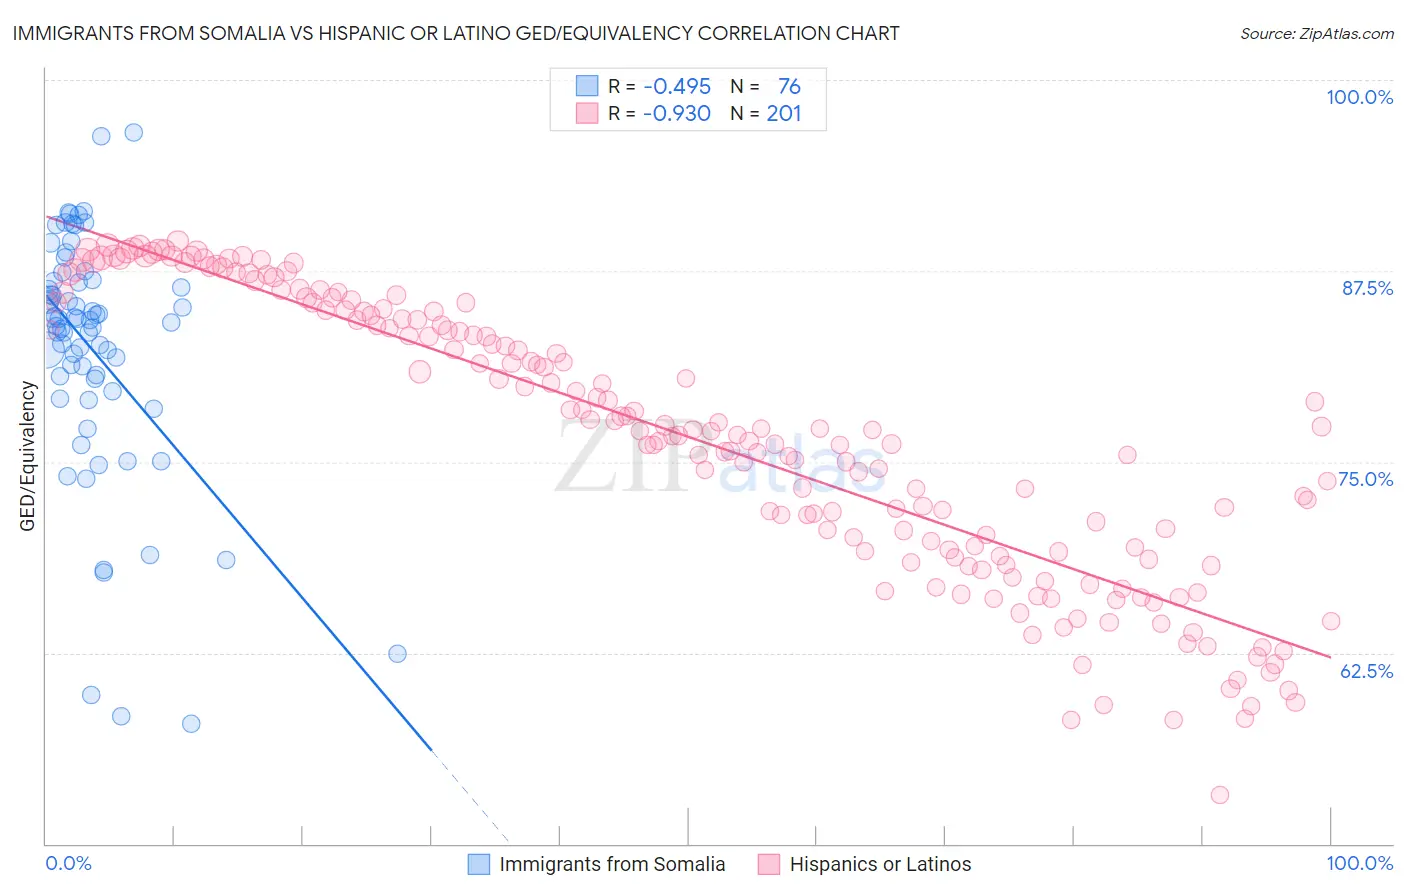 Immigrants from Somalia vs Hispanic or Latino GED/Equivalency